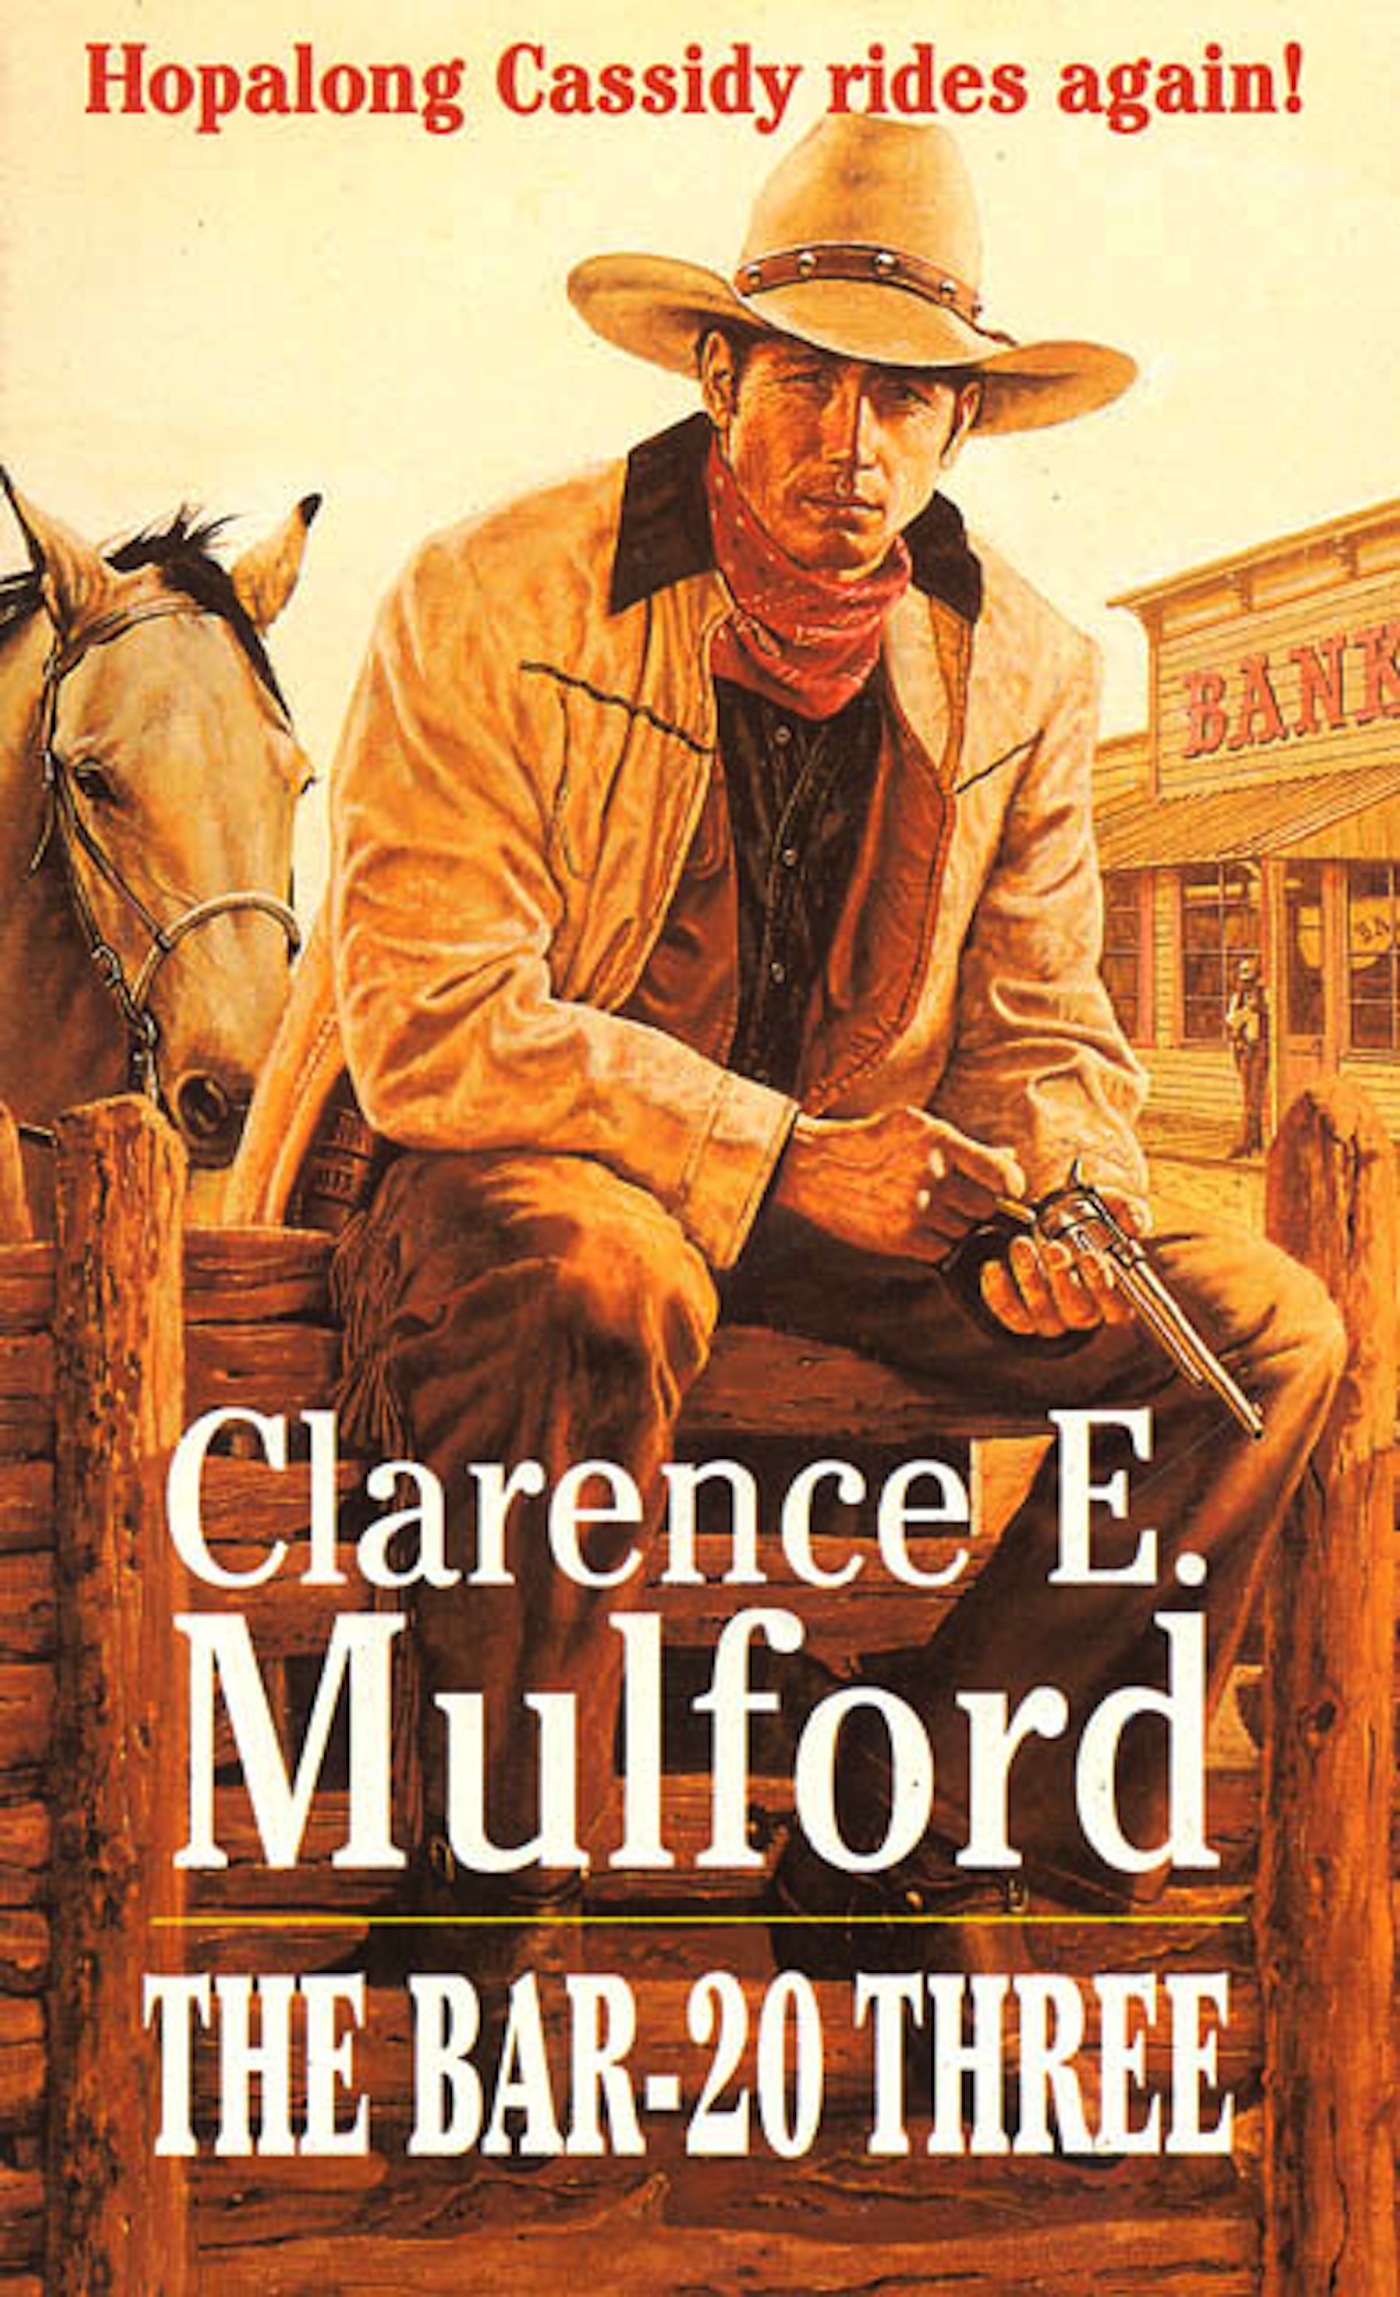 Bar-20 Three : A Hopalong Cassidy Novel by Clarence E. Mulford